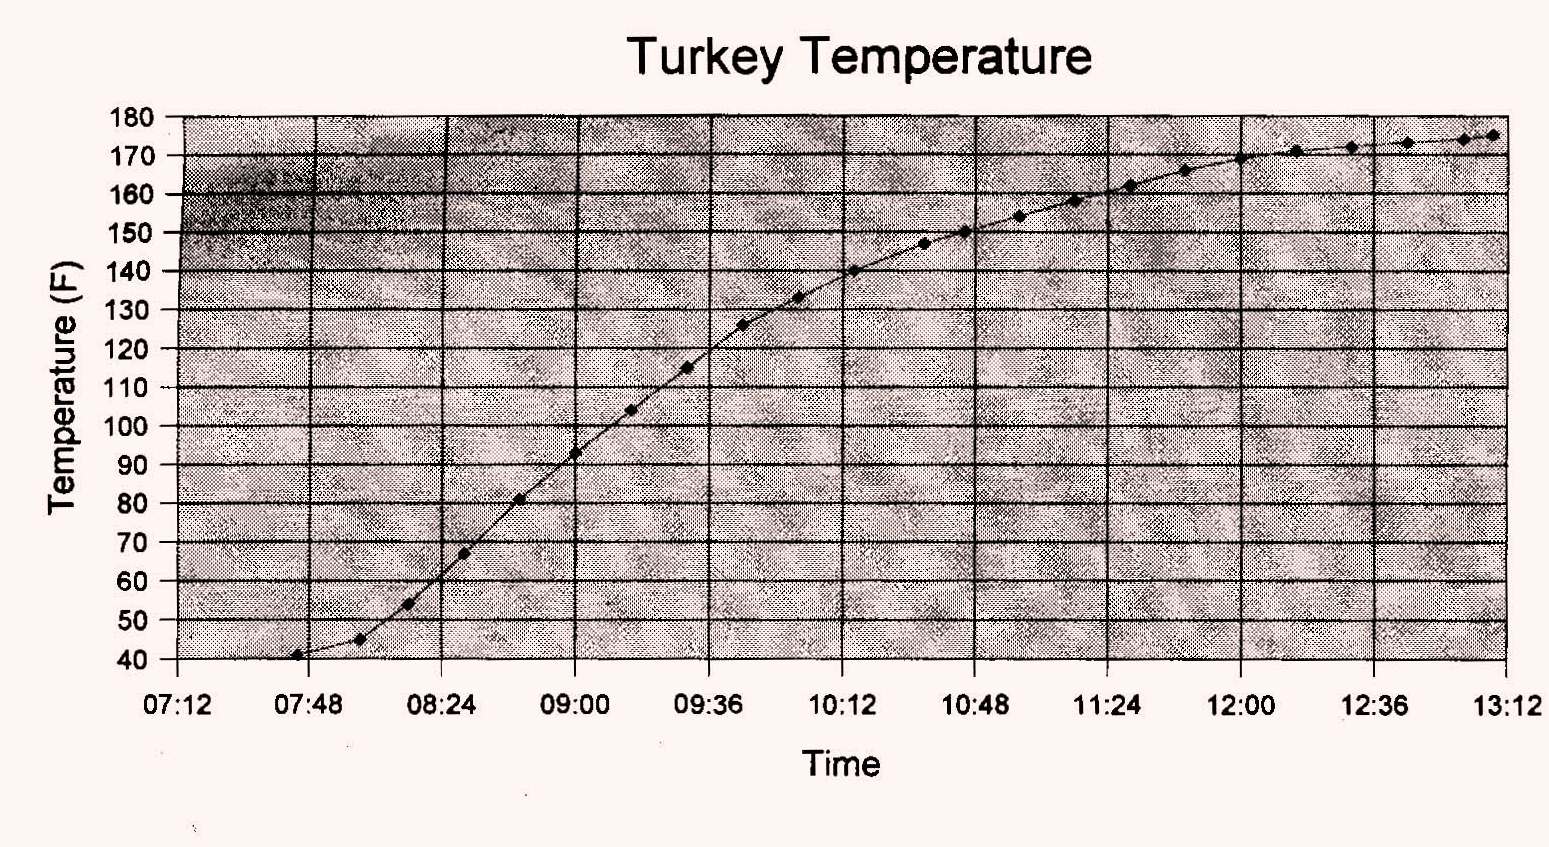 http://www.gfzing.com/wp-content/uploads/2010/11/turkey-roasting-graph.jpg